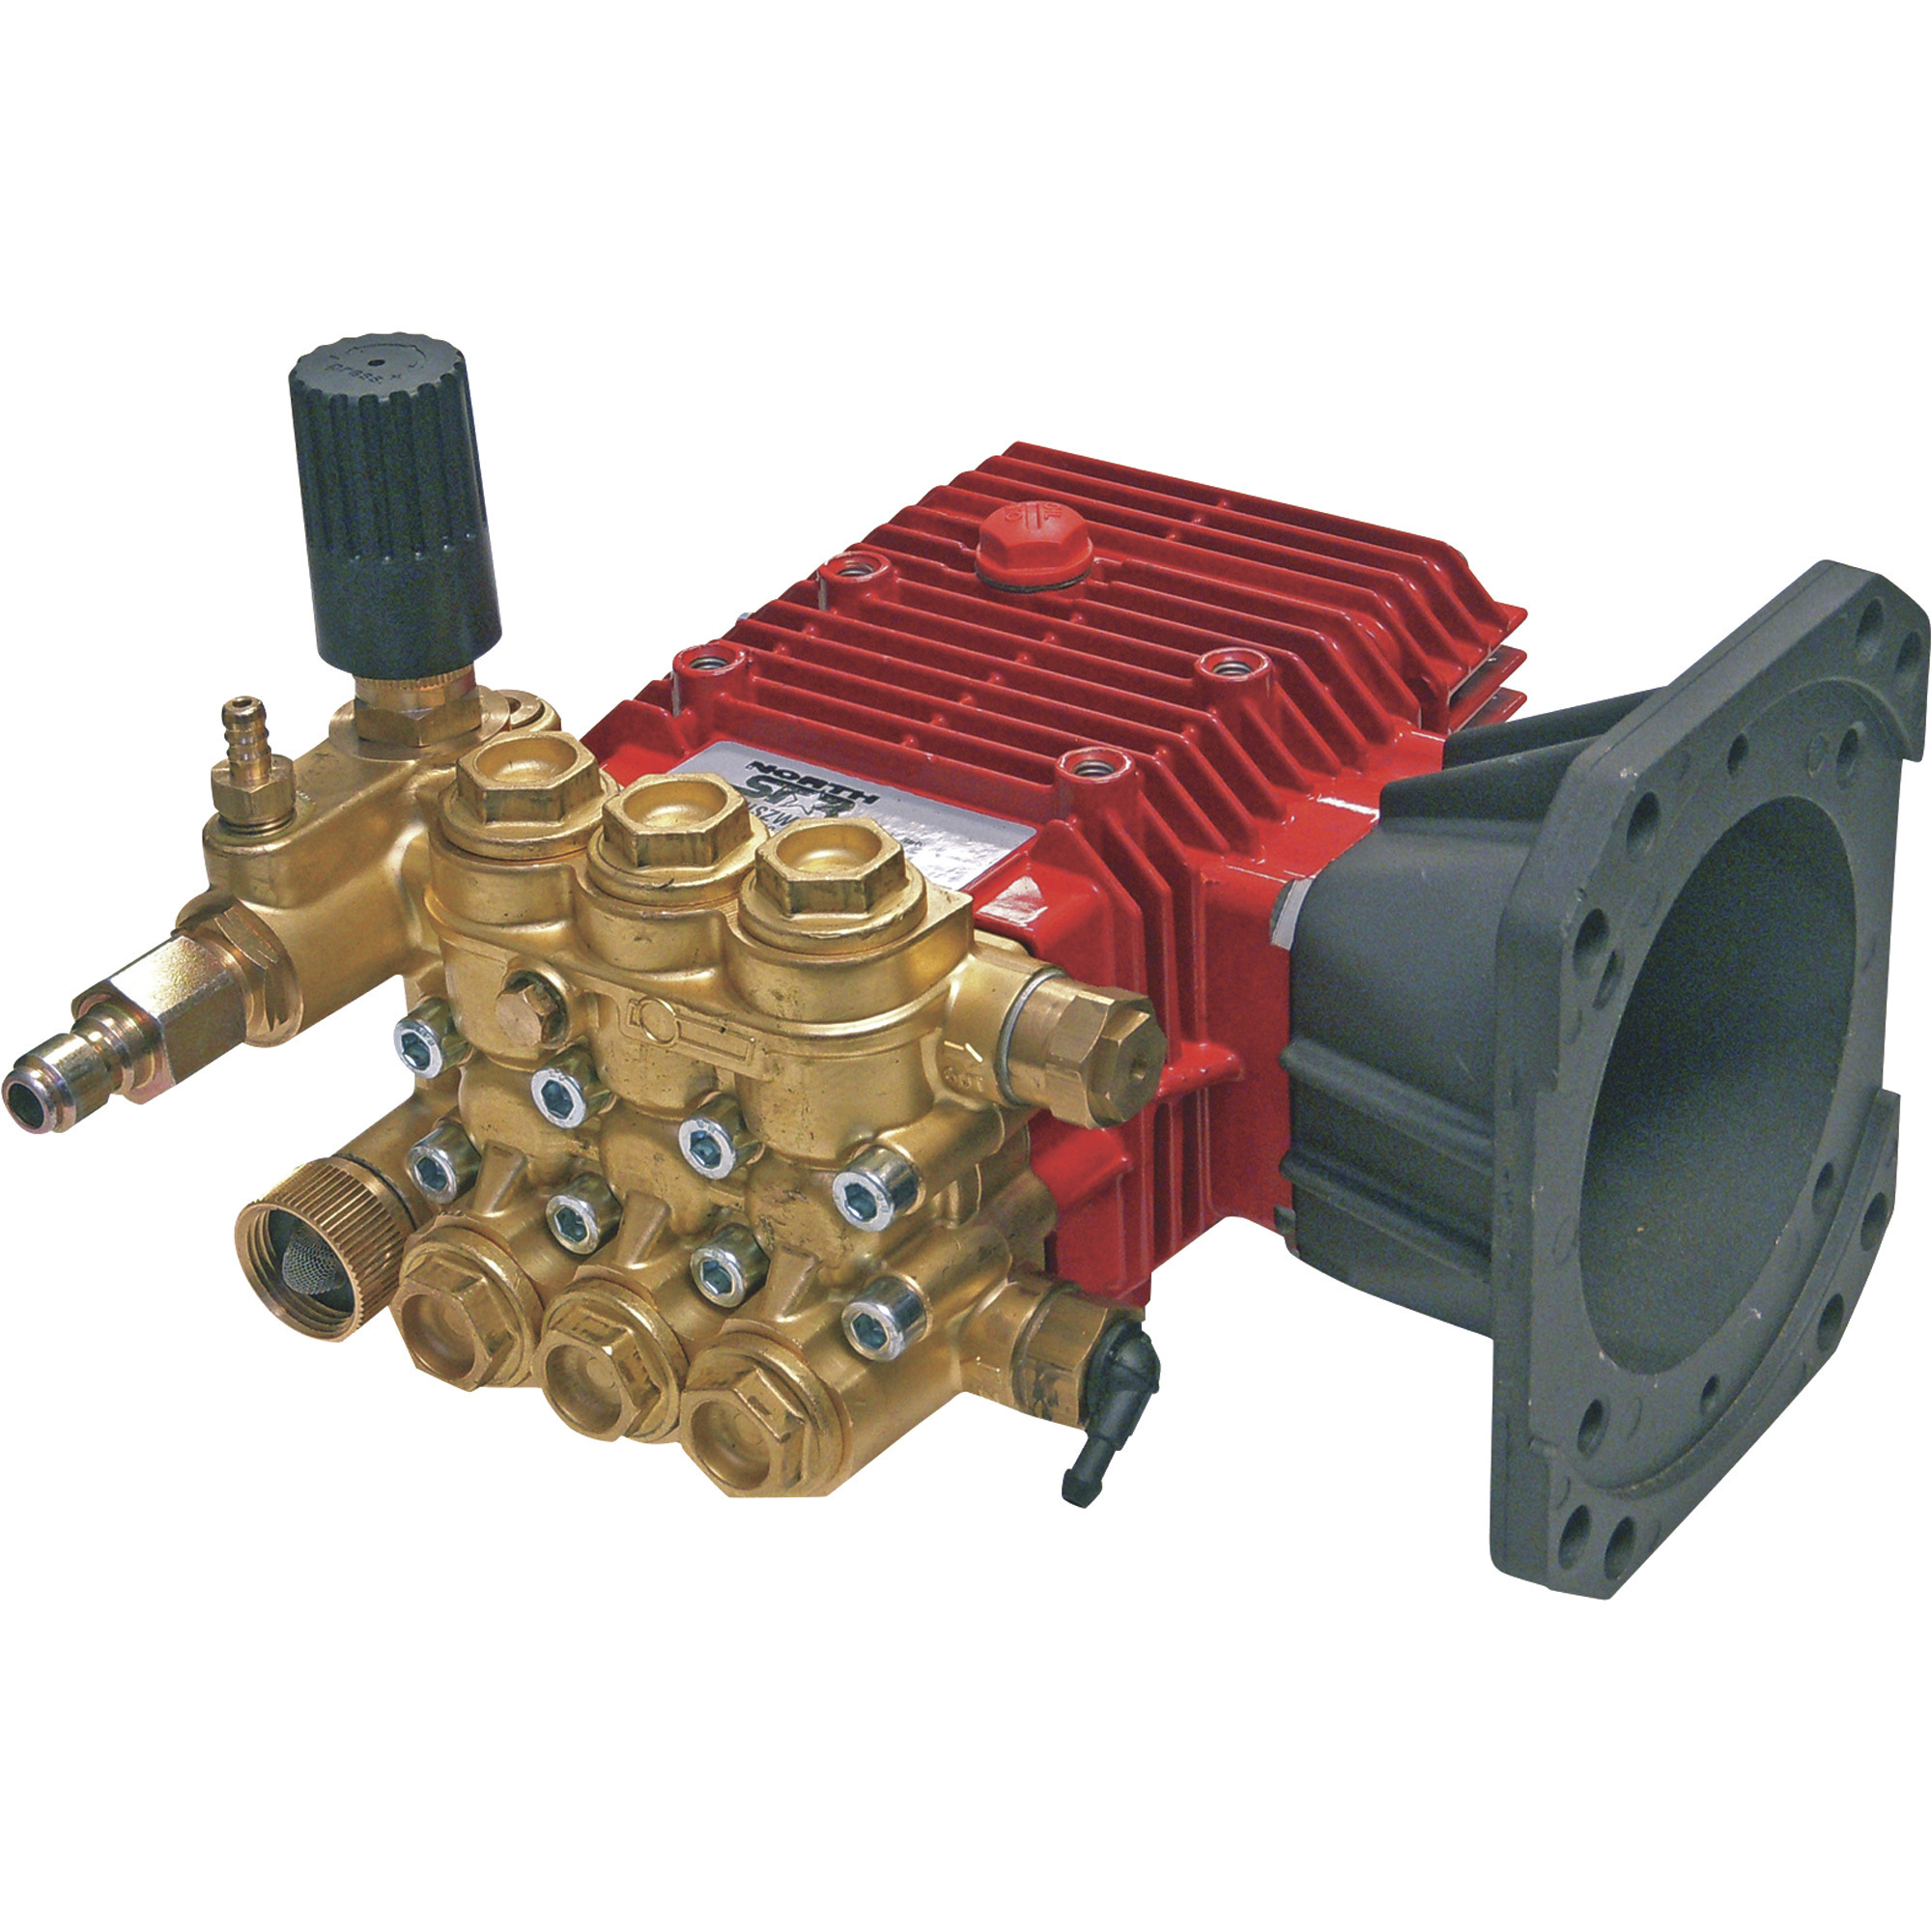 NorthStar Pressure Washer Pump, 4000 PSI, 3.5 GPM, Direct Drive, Gas, Model NSZW3540